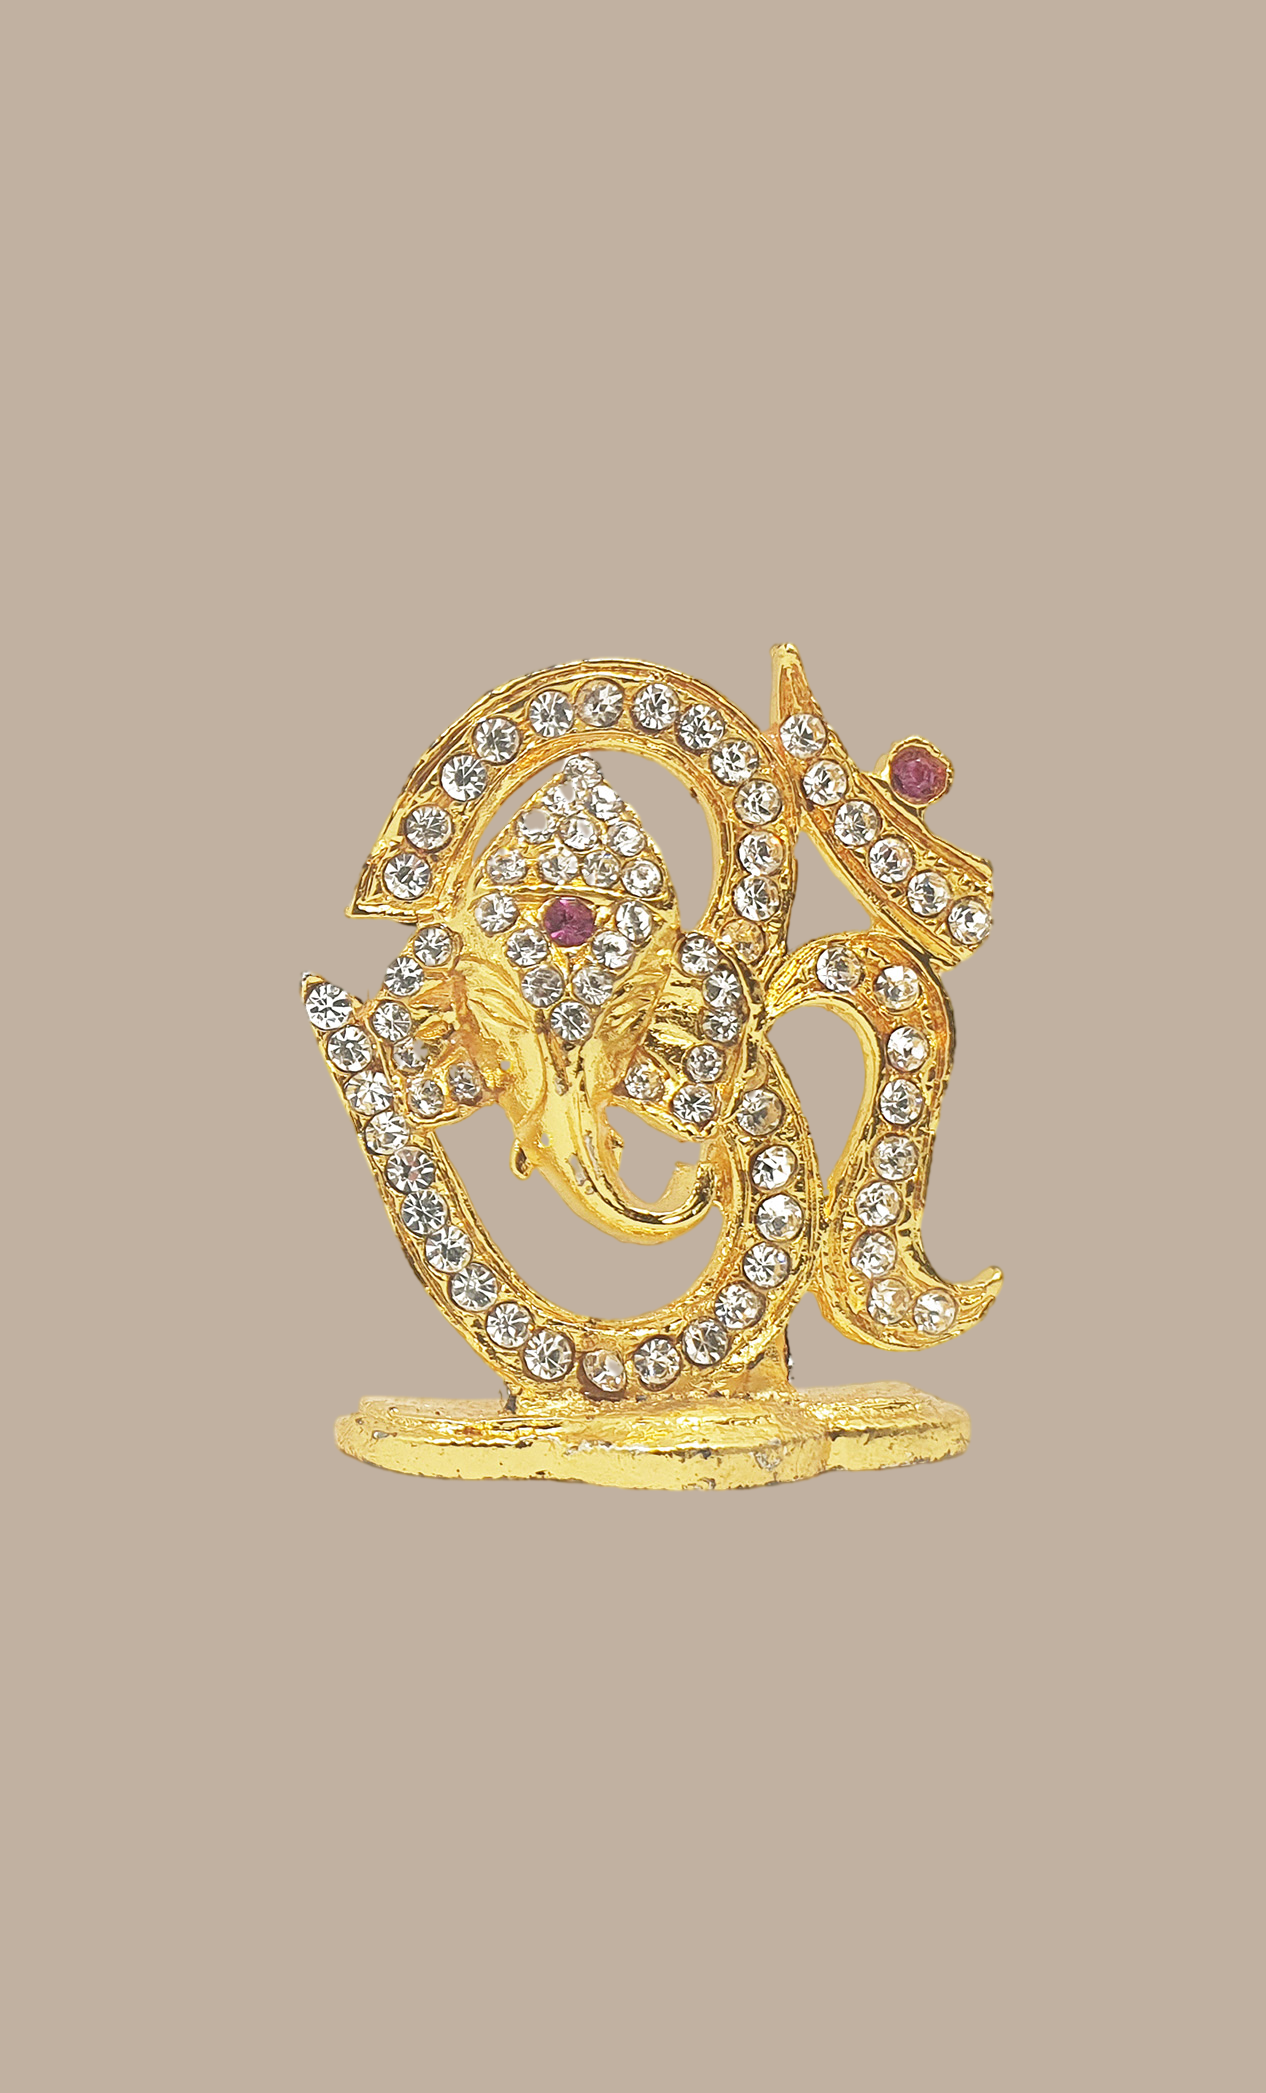 Aum With Ganesha Display Ornament